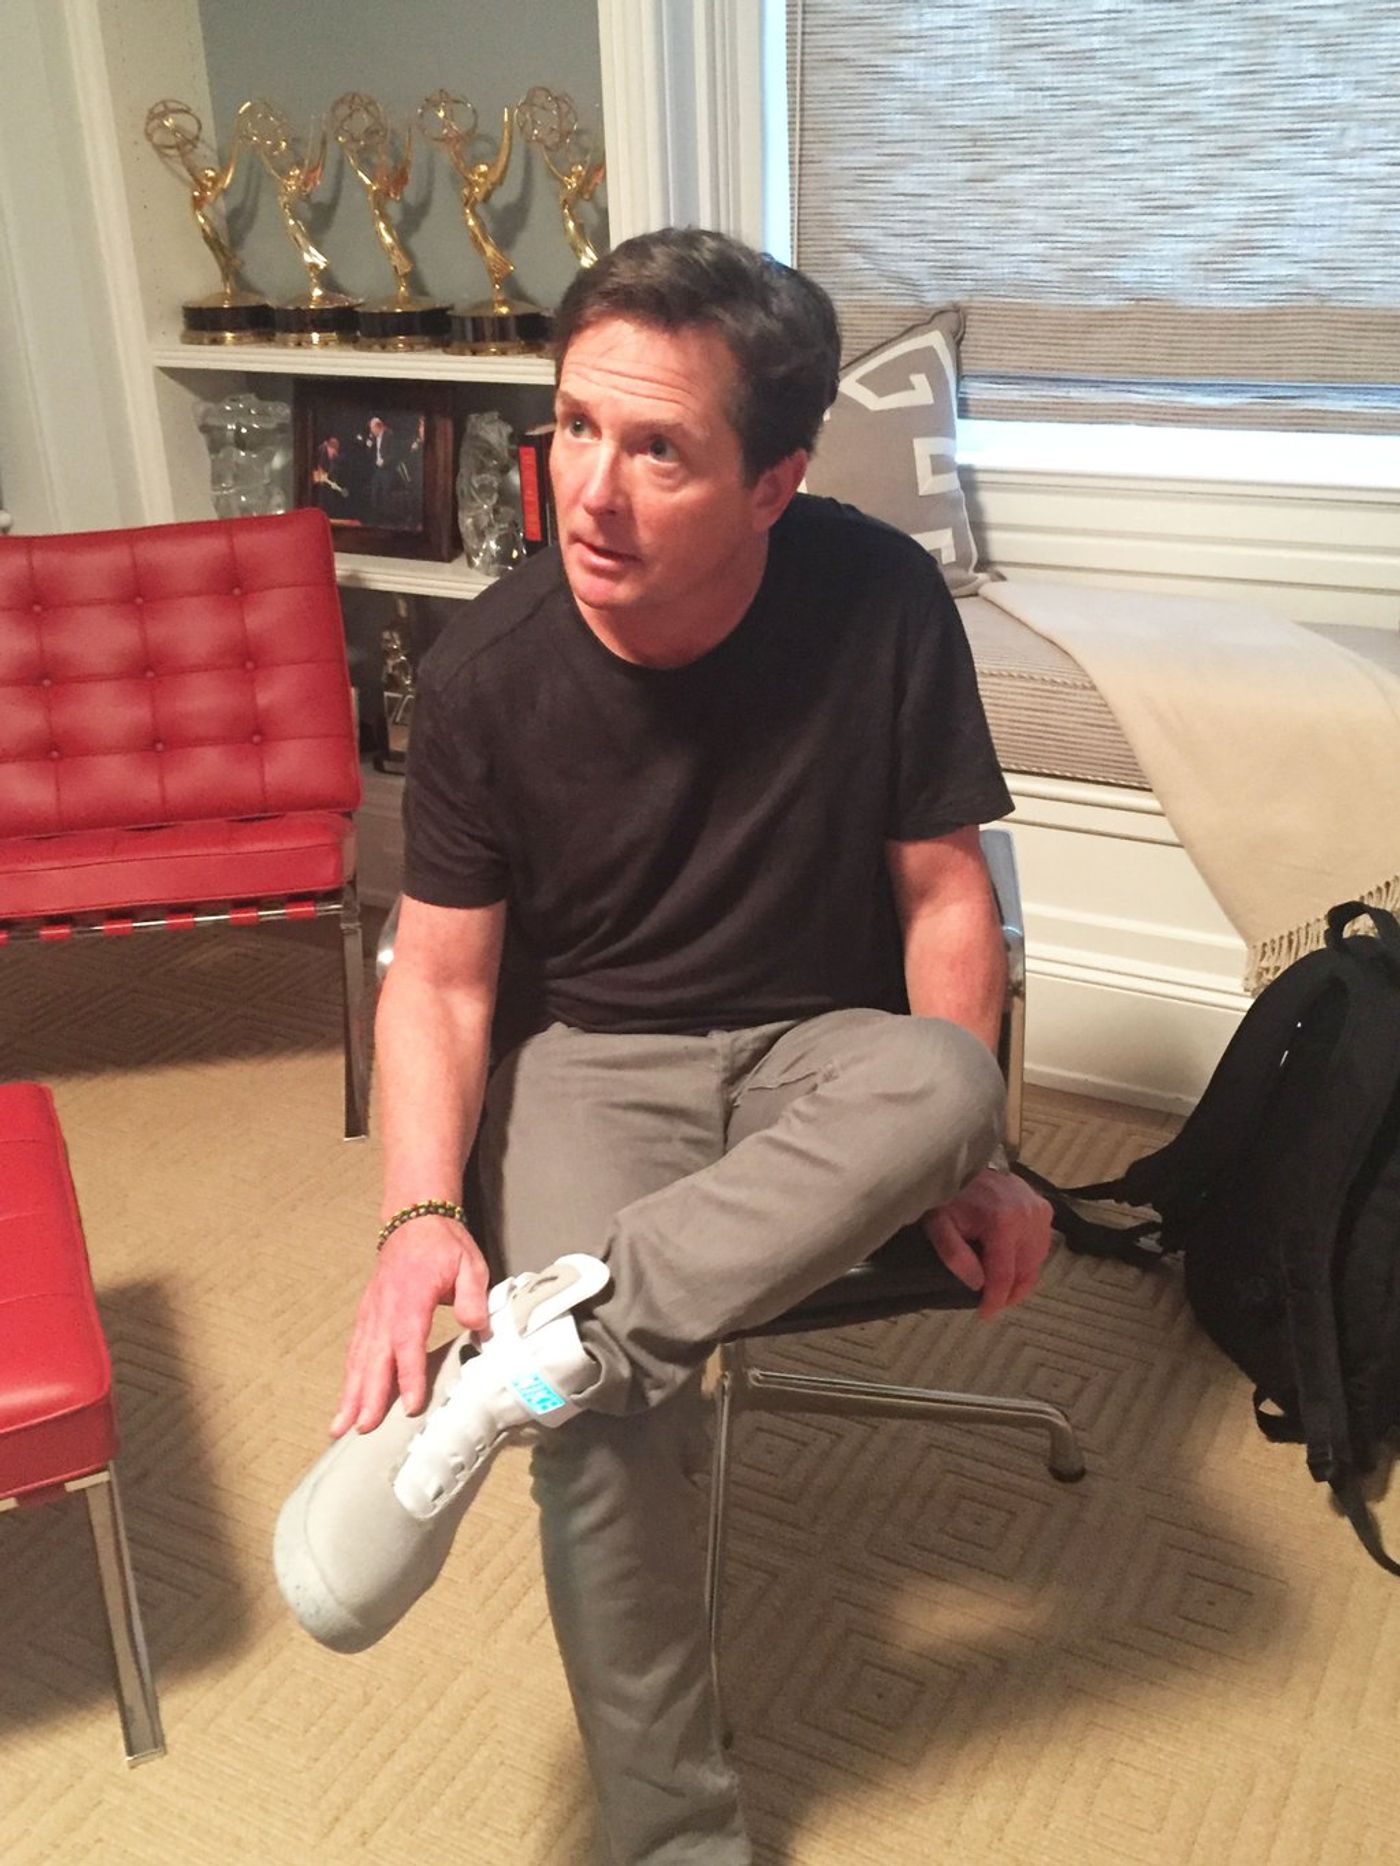 Michael J. Fox puts on a Nike self-lacing shoe.